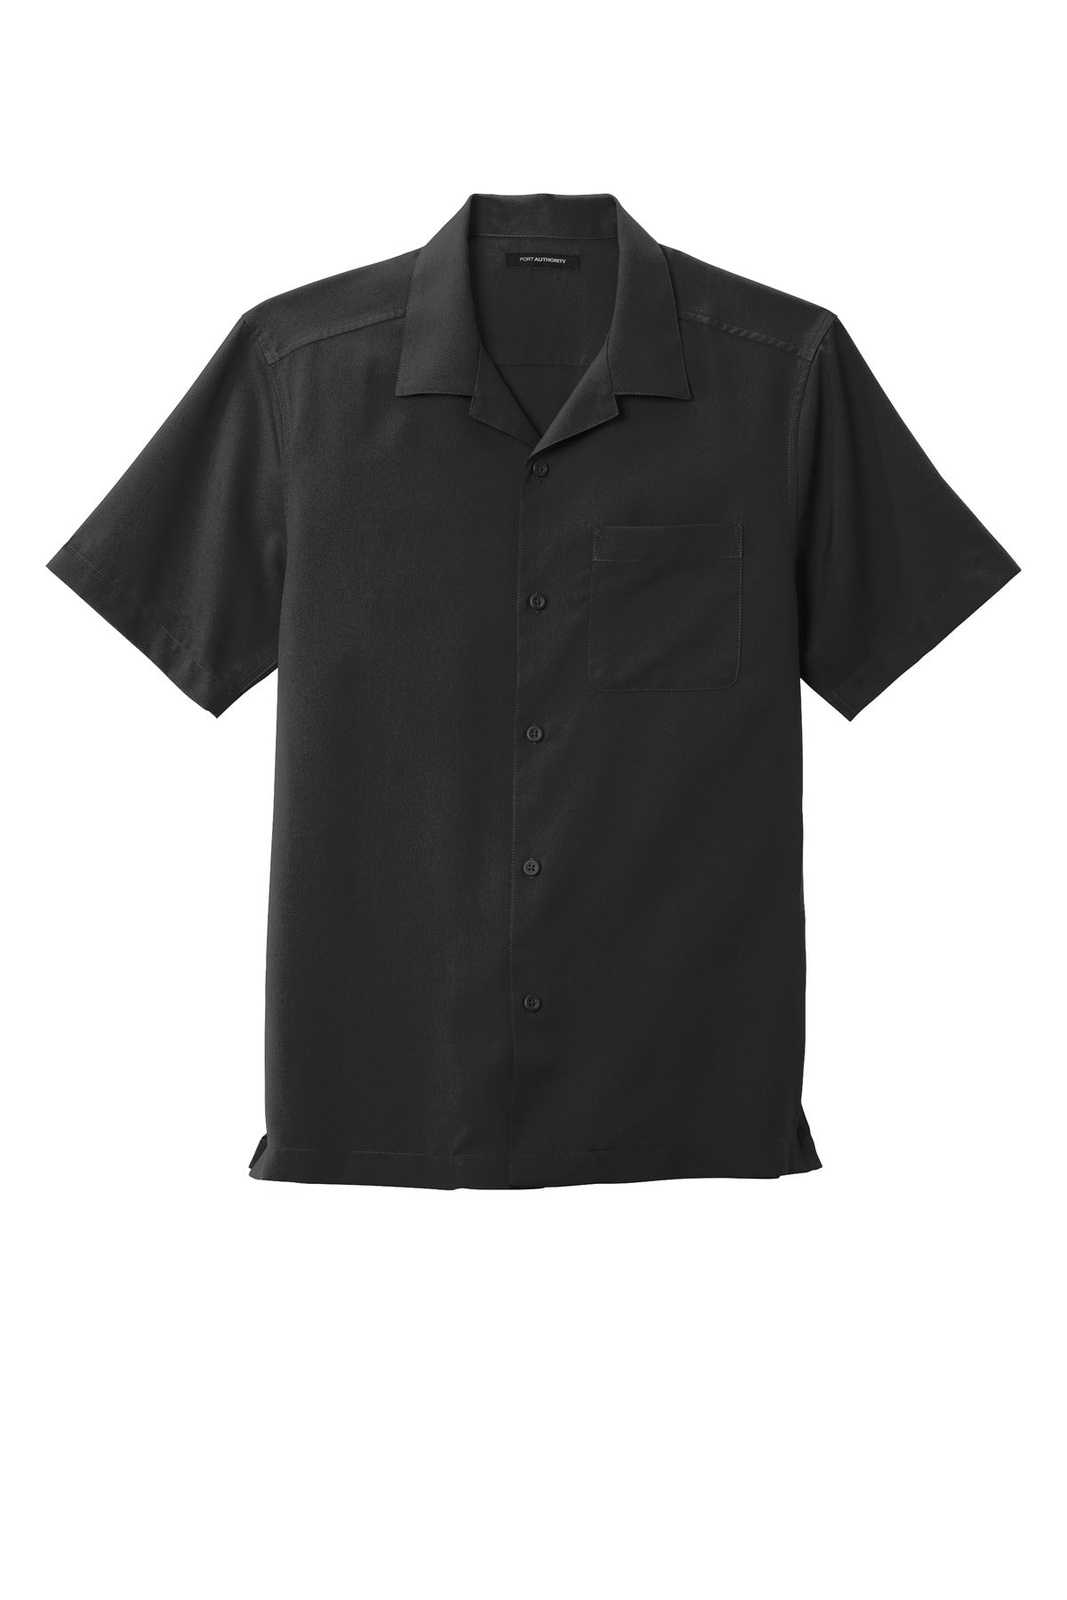 Port Authority W400 Short Sleeve Performance Staff Shirt - Black - HIT a Double - 5